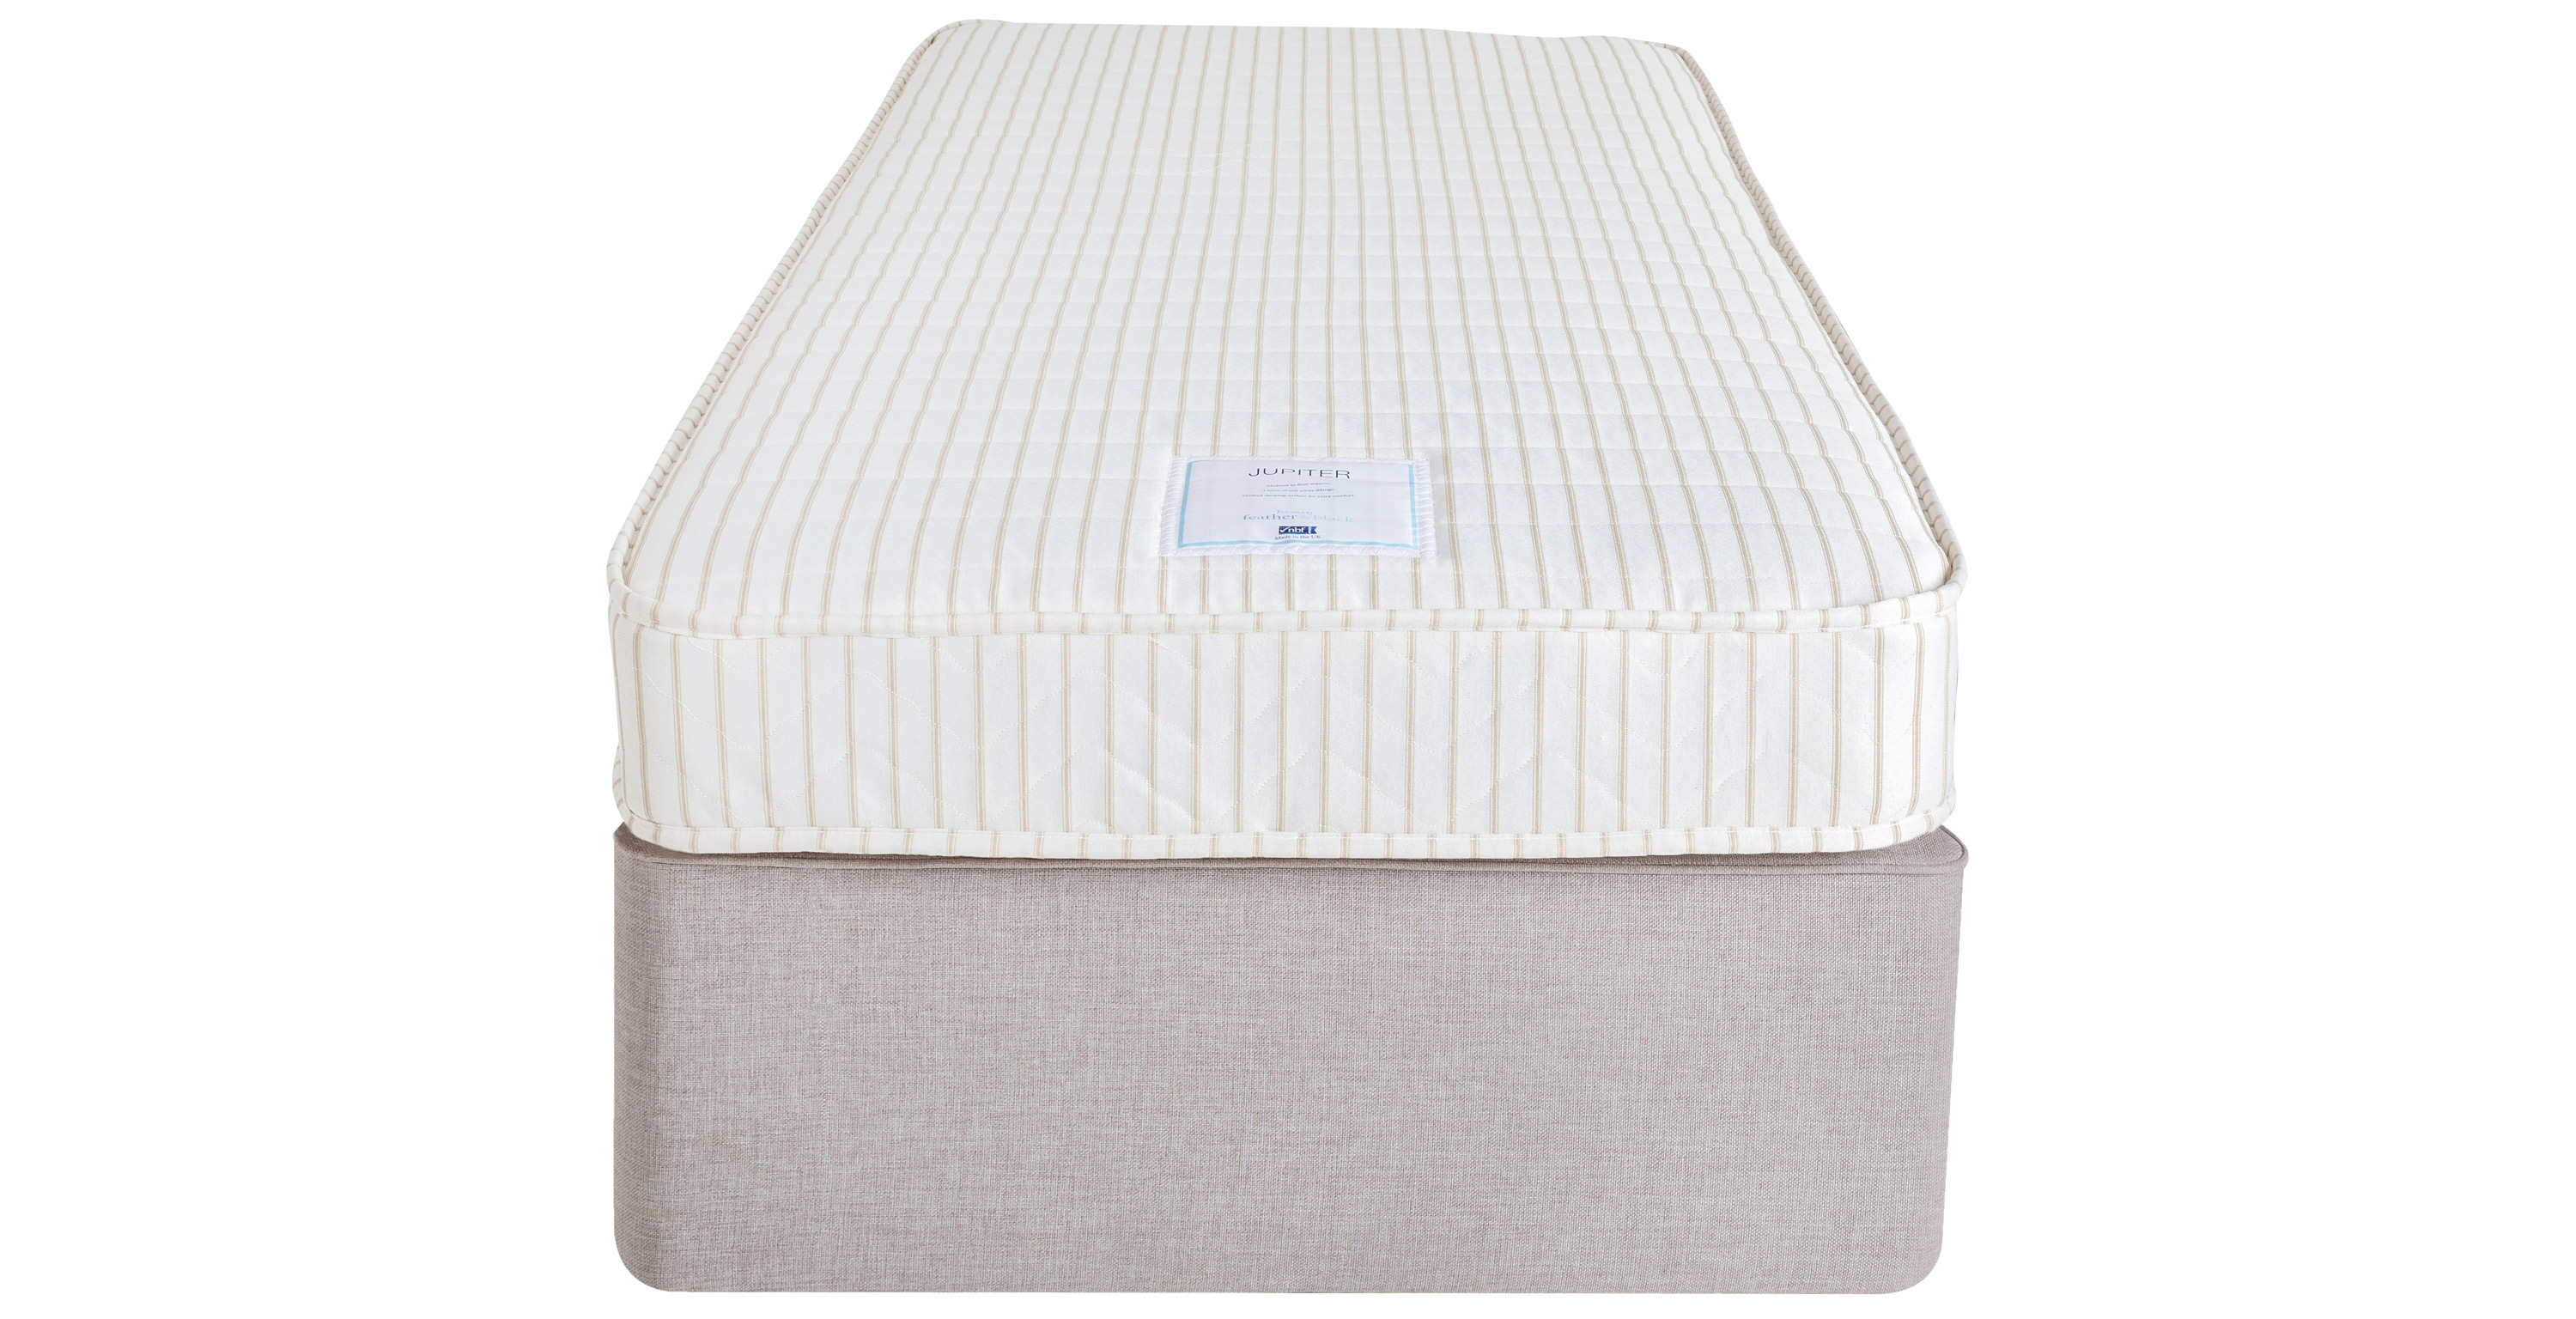 jupiter industries crib mattress